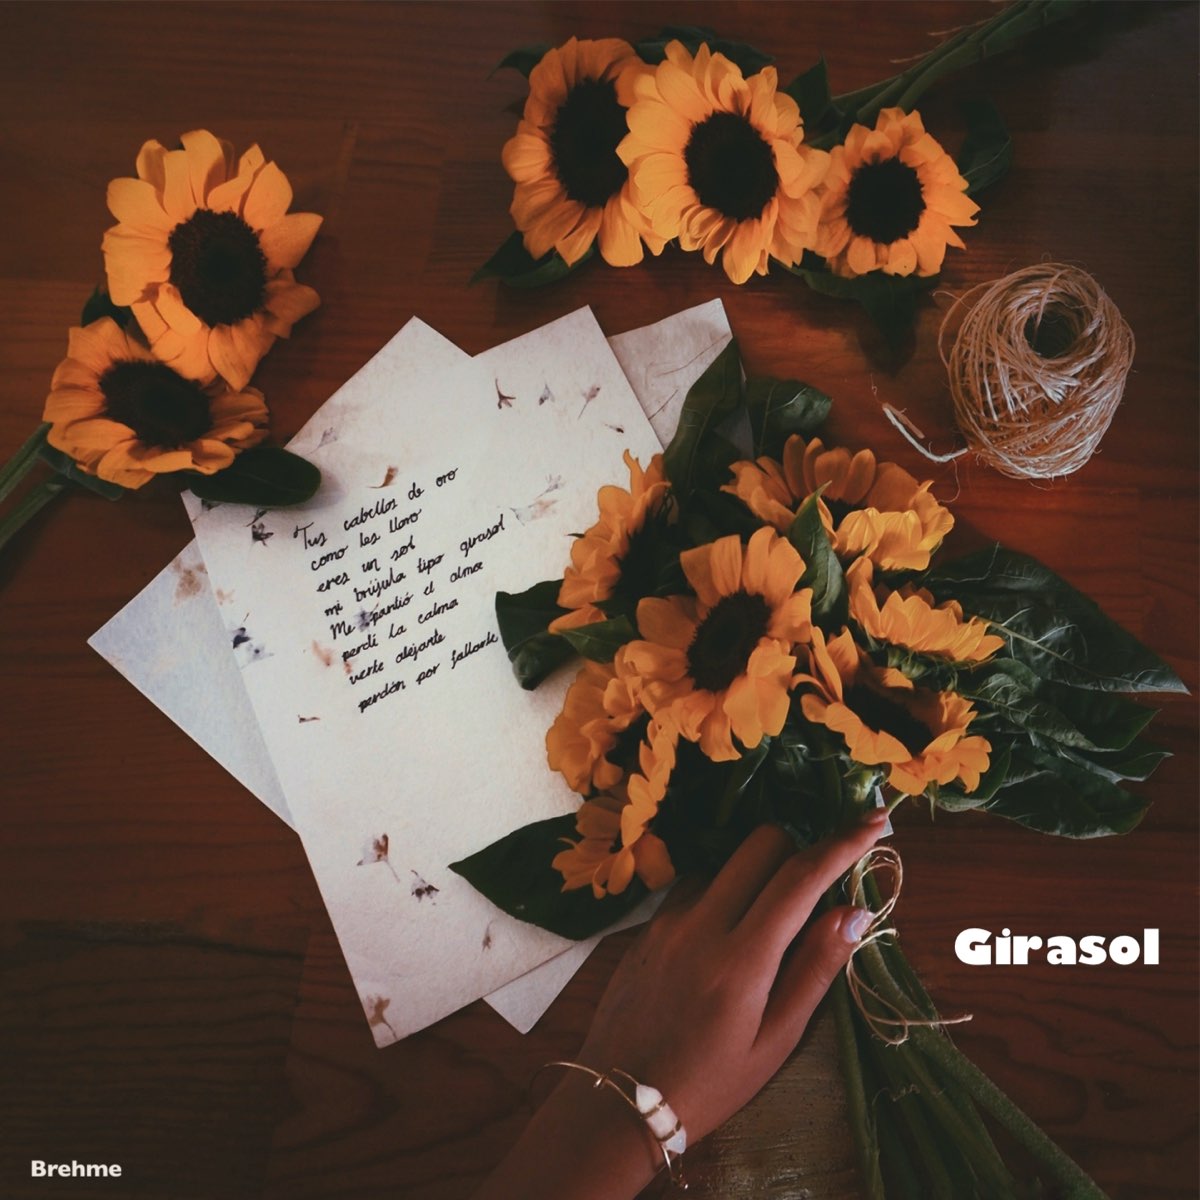 Girasol - Single by Brehme on Apple Music